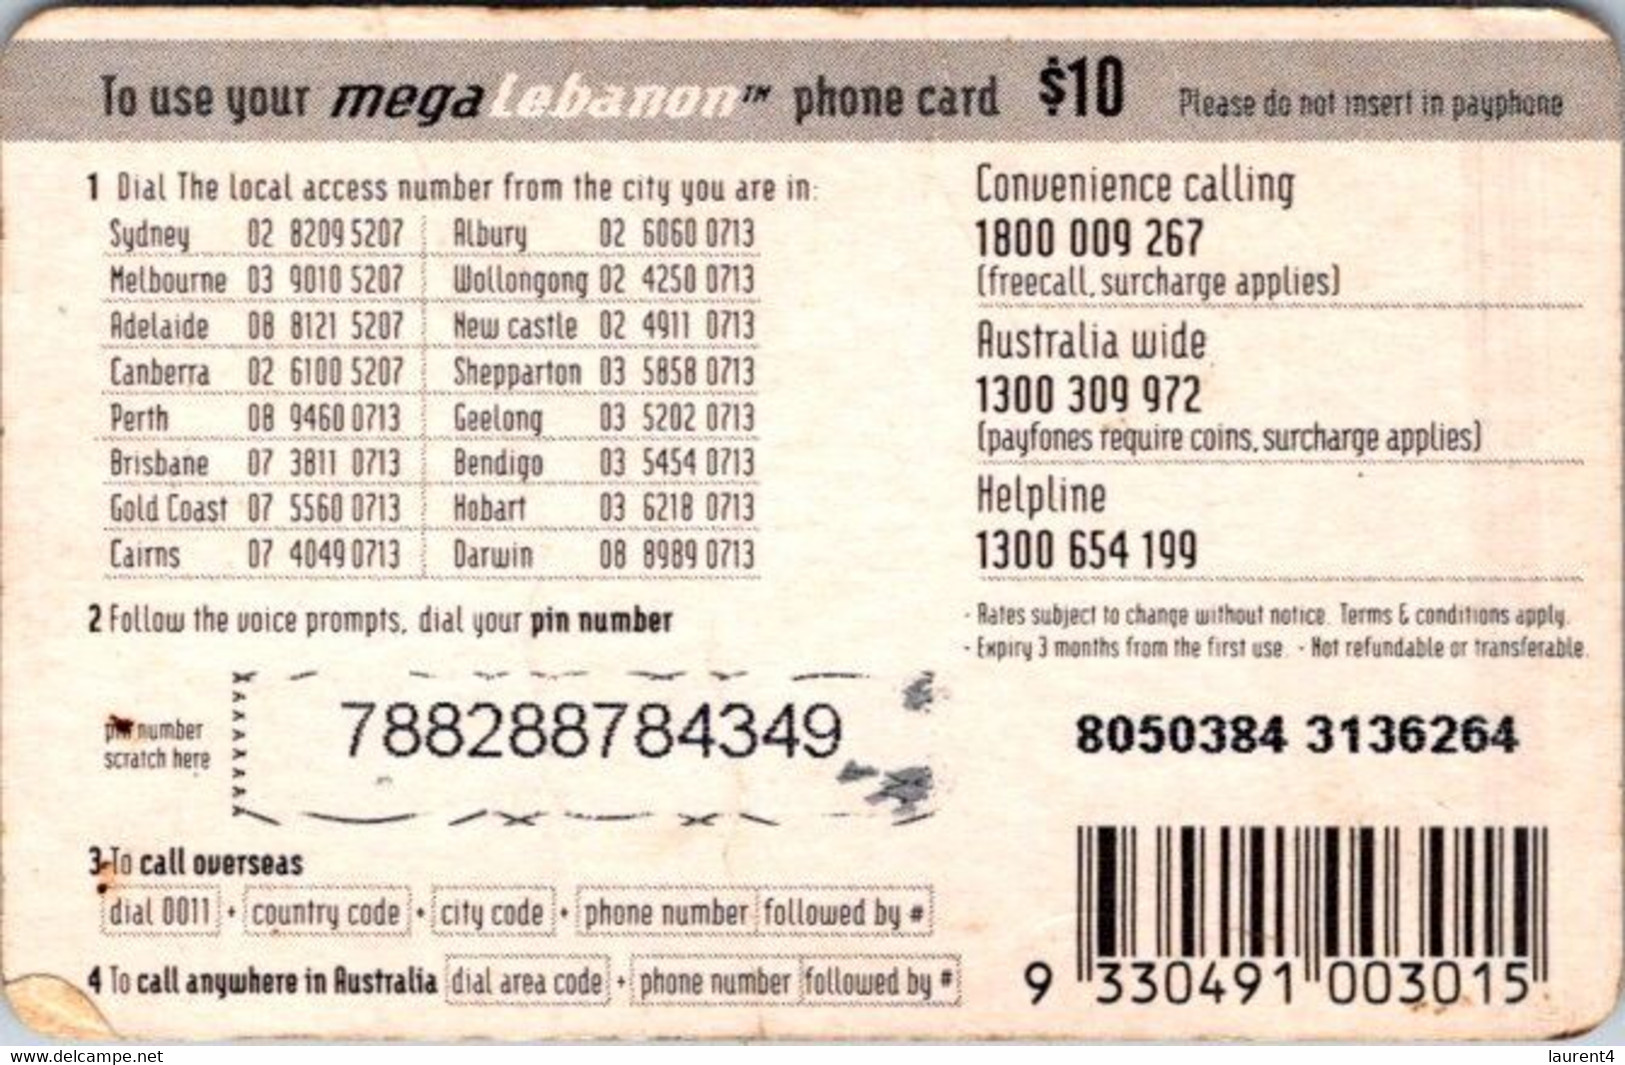 (3-10-2021 F) Phonecard -  Liban - (1 Phonecard) MegaLebanon $ 10.00 - Lebanon